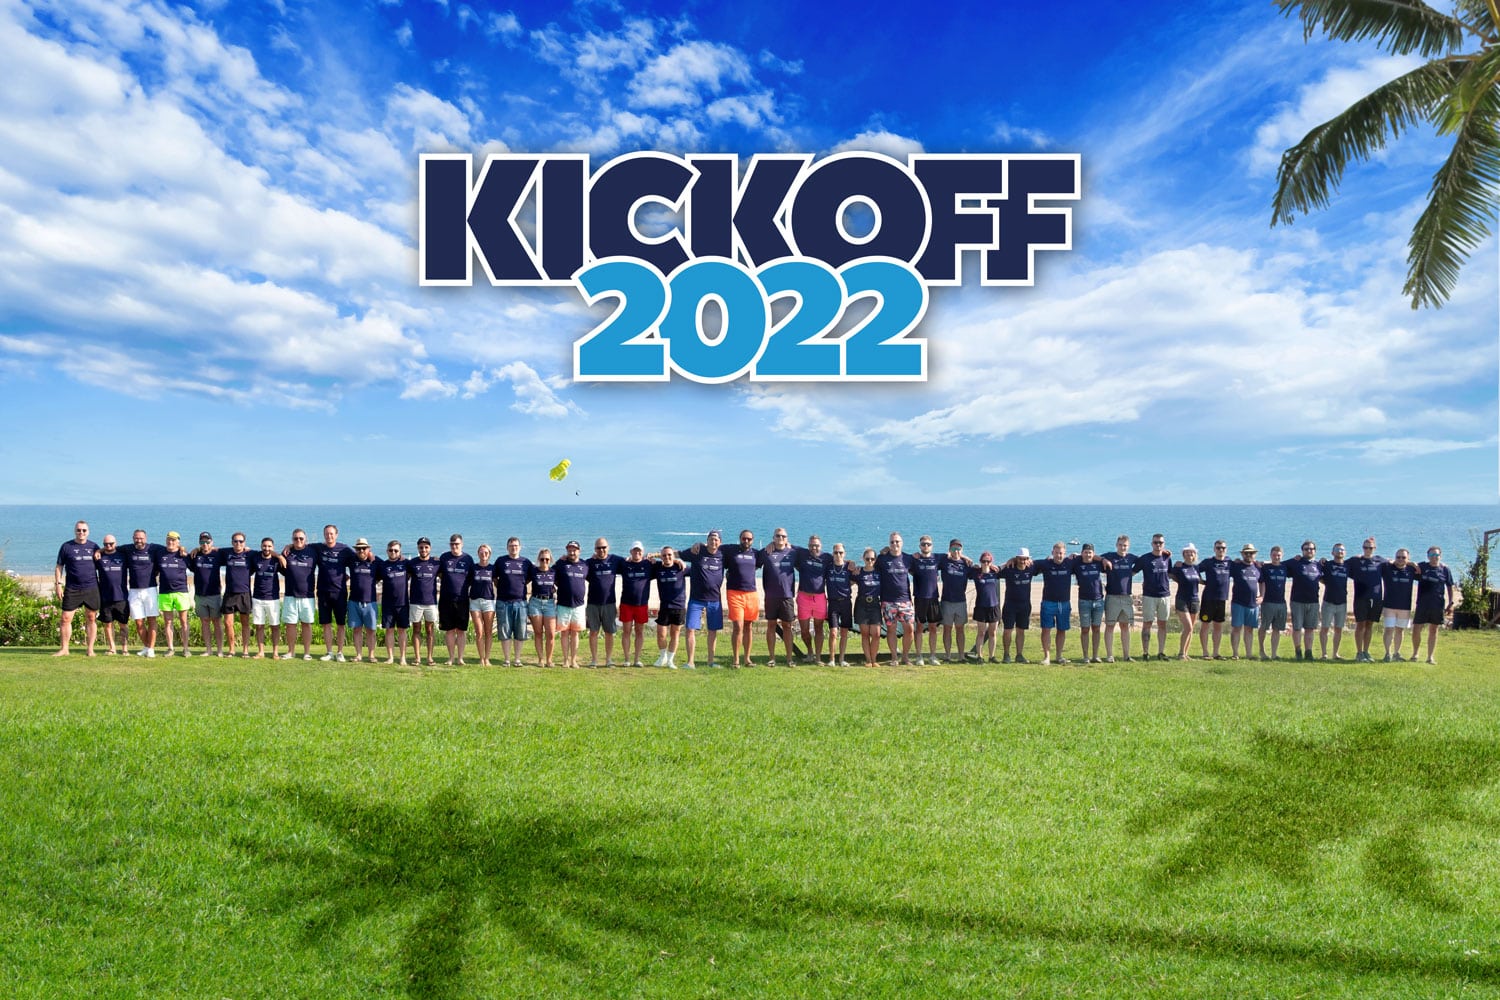 Kickoff 2022 premium concepts GmbH